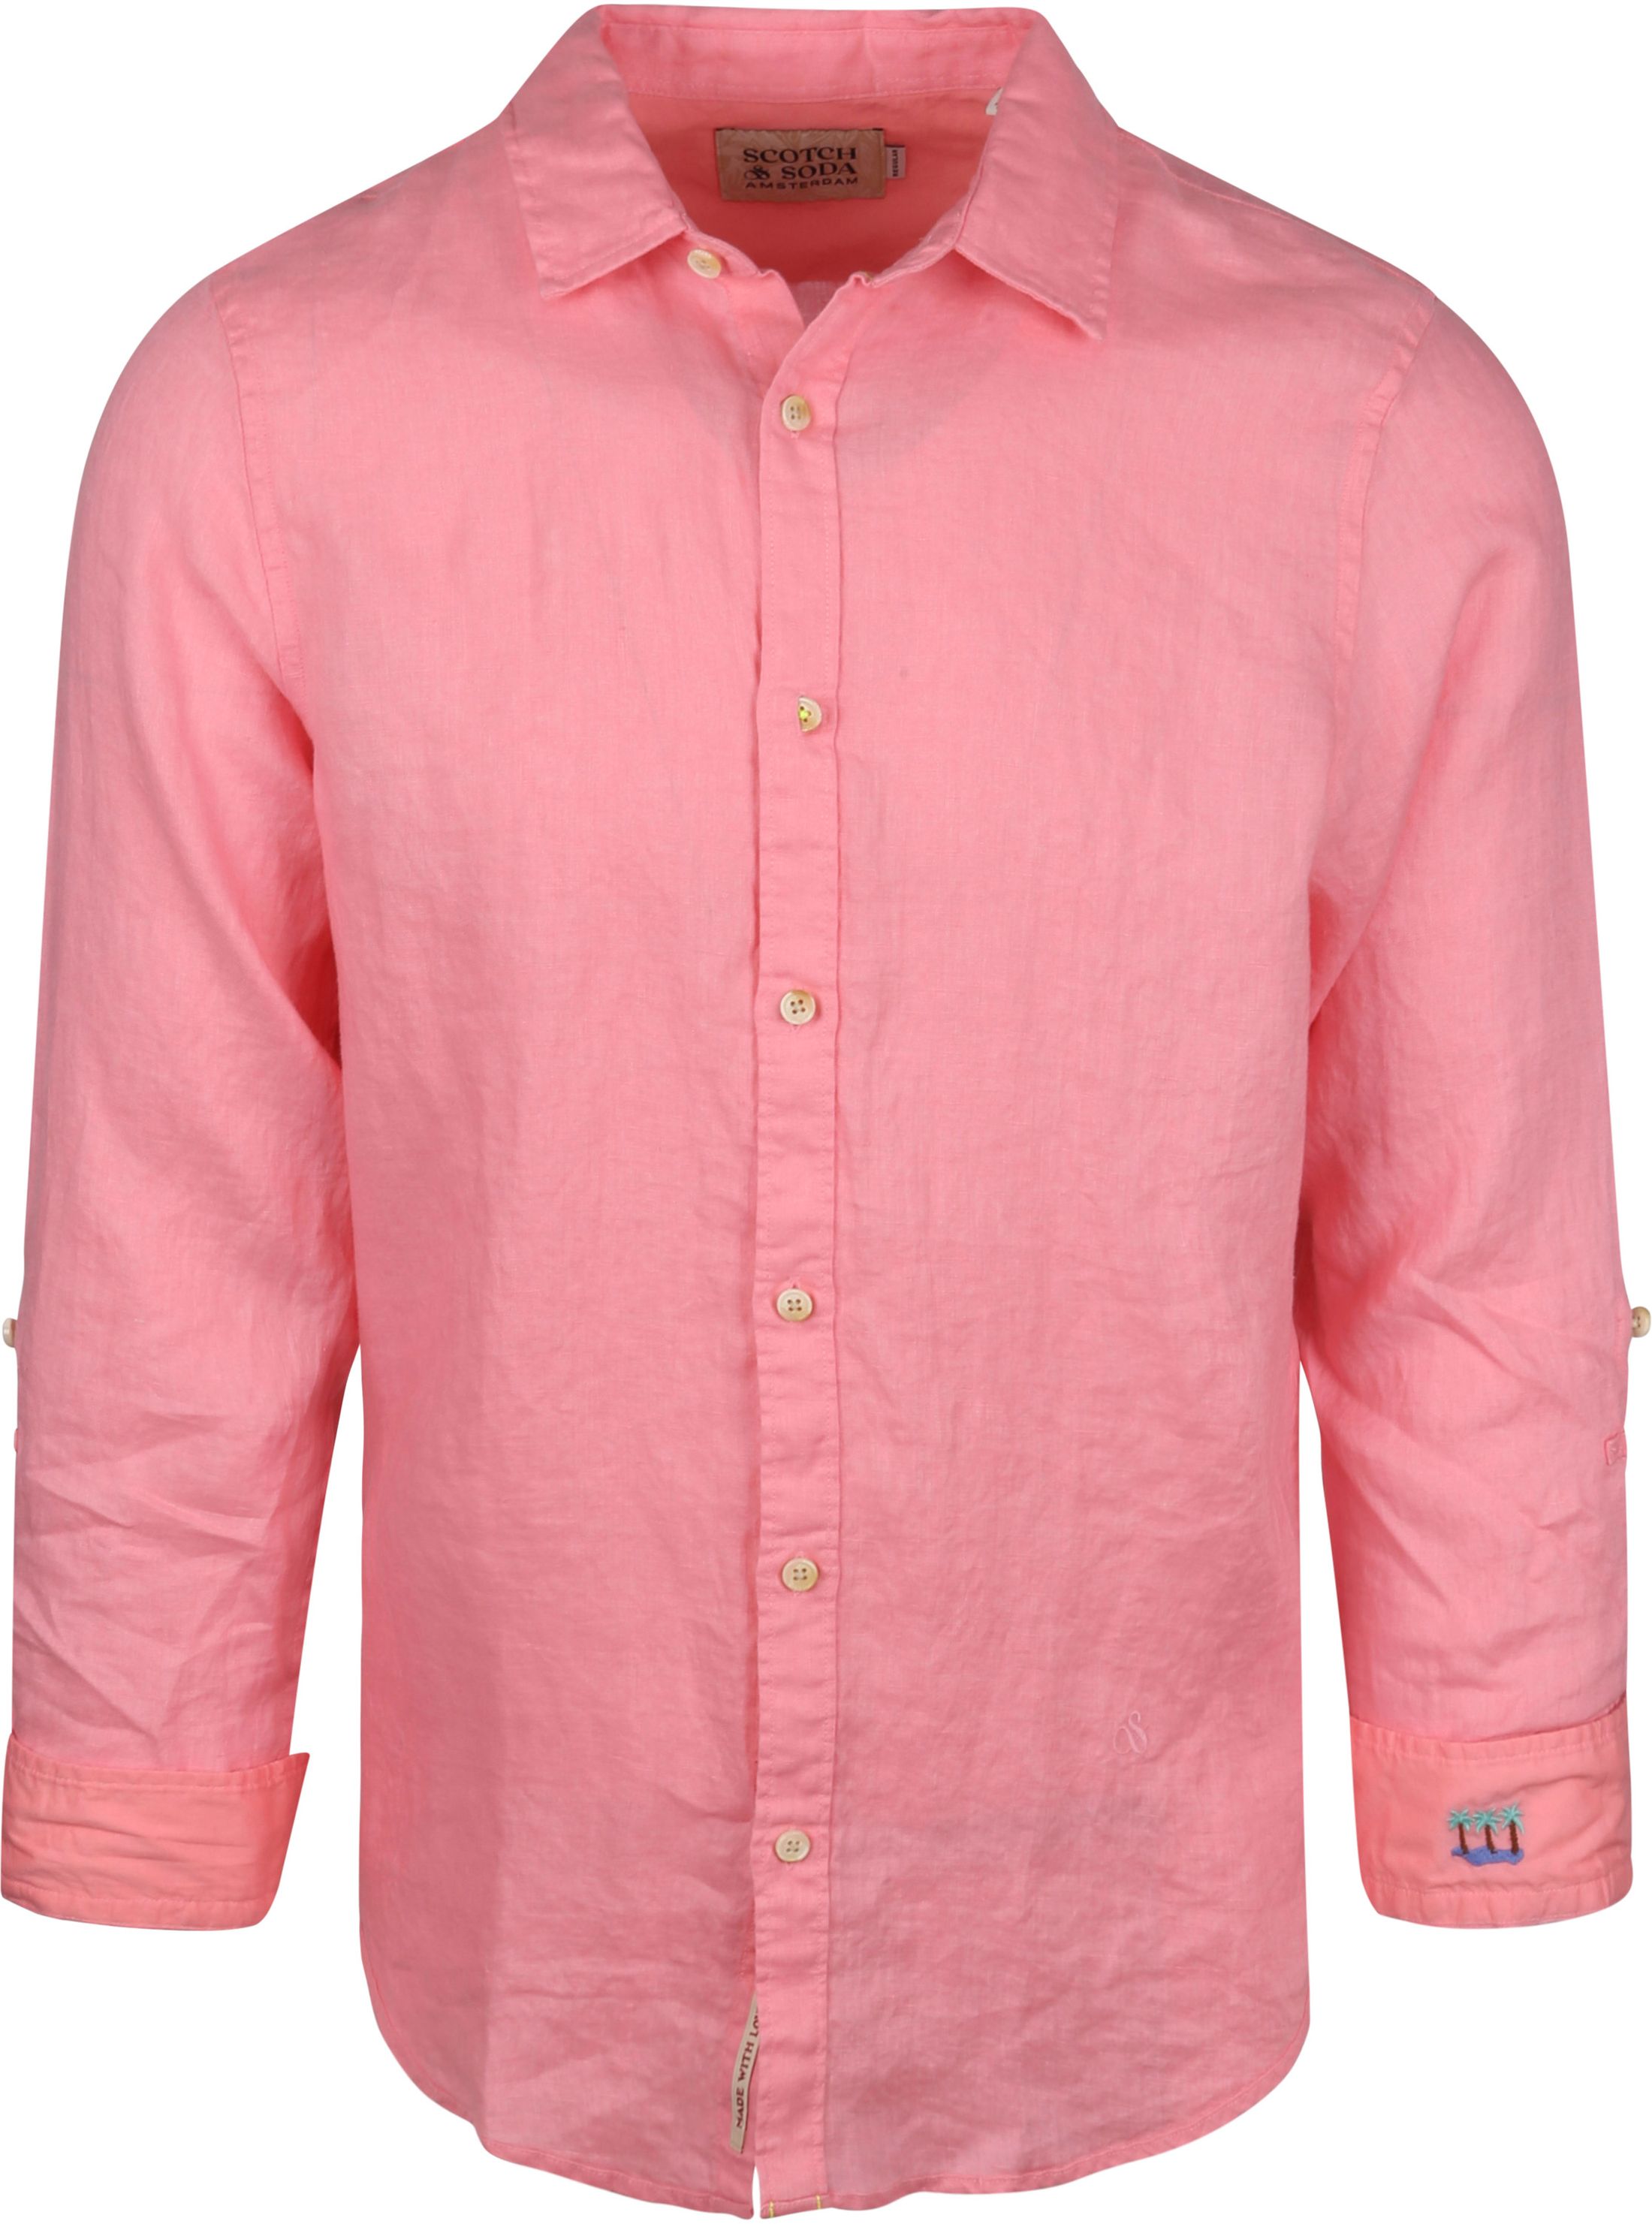 Scotch and Soda Linen Shirt Pink size L